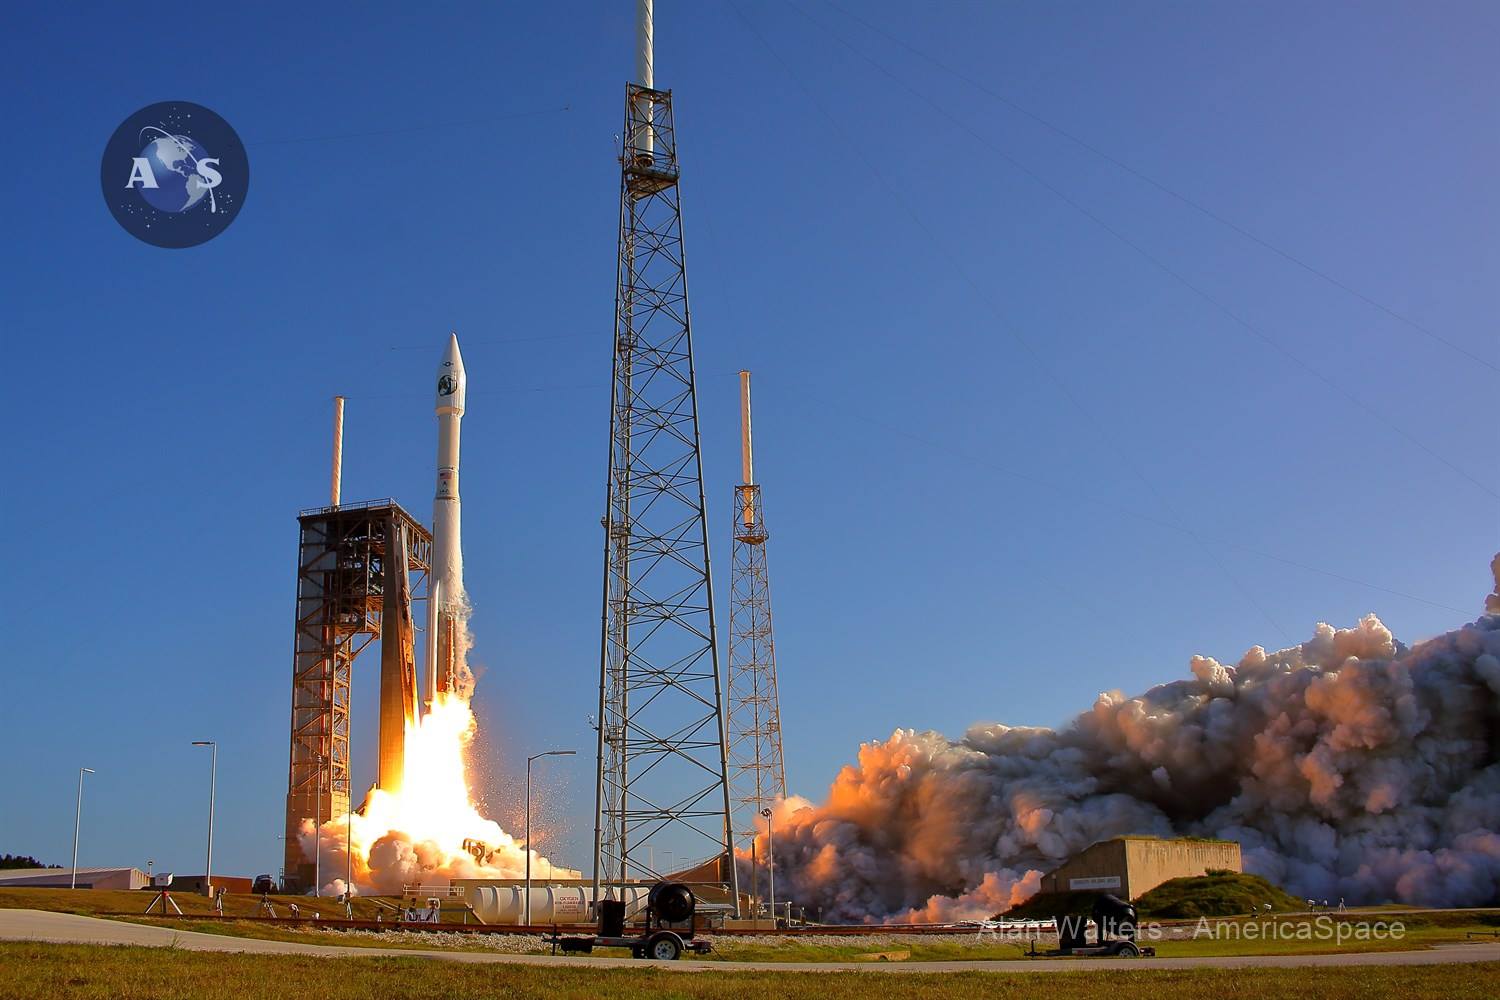 NRO-61 launch on a ULA Atlas-V 421 rocket this morning. Photo Credit: Alan Walters / AmericaSpace